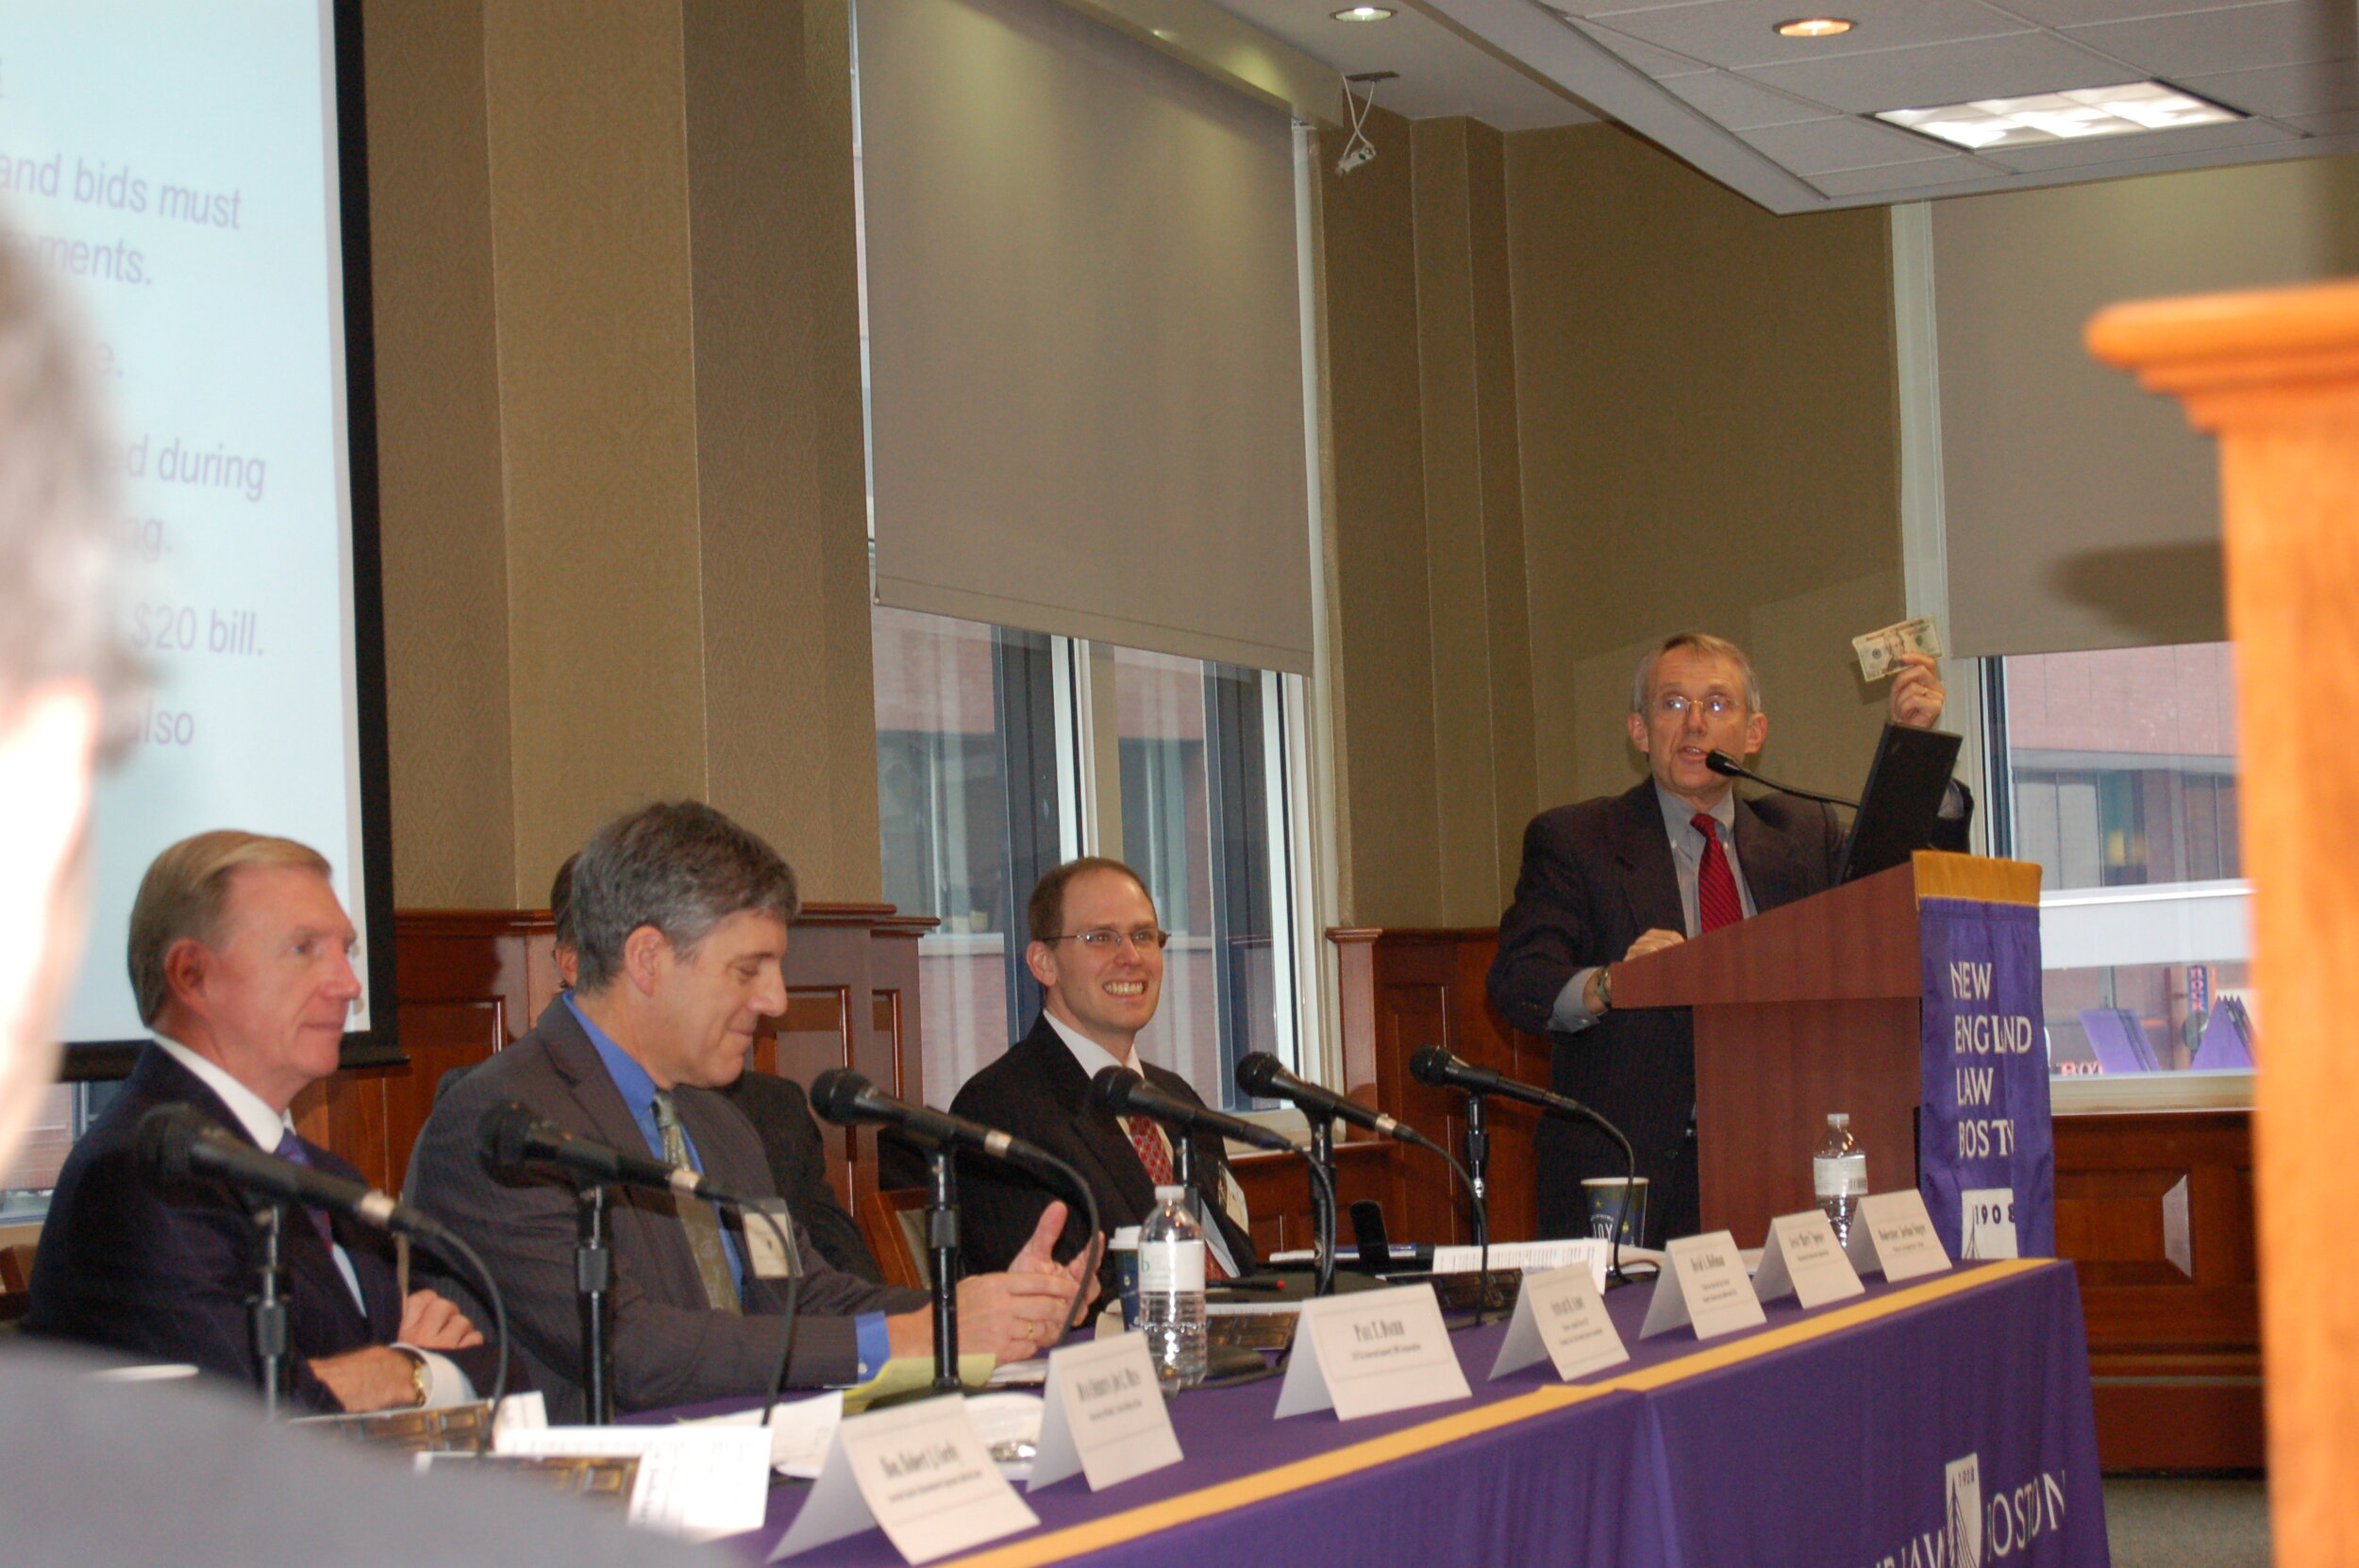  Prof. David Hoffman of Harvard Law School gestures at the podium. Seated from left to right: Paul Dacier, Stewart Aaron, Harry Spence (hidden), and Prof. Jordan Singer. 